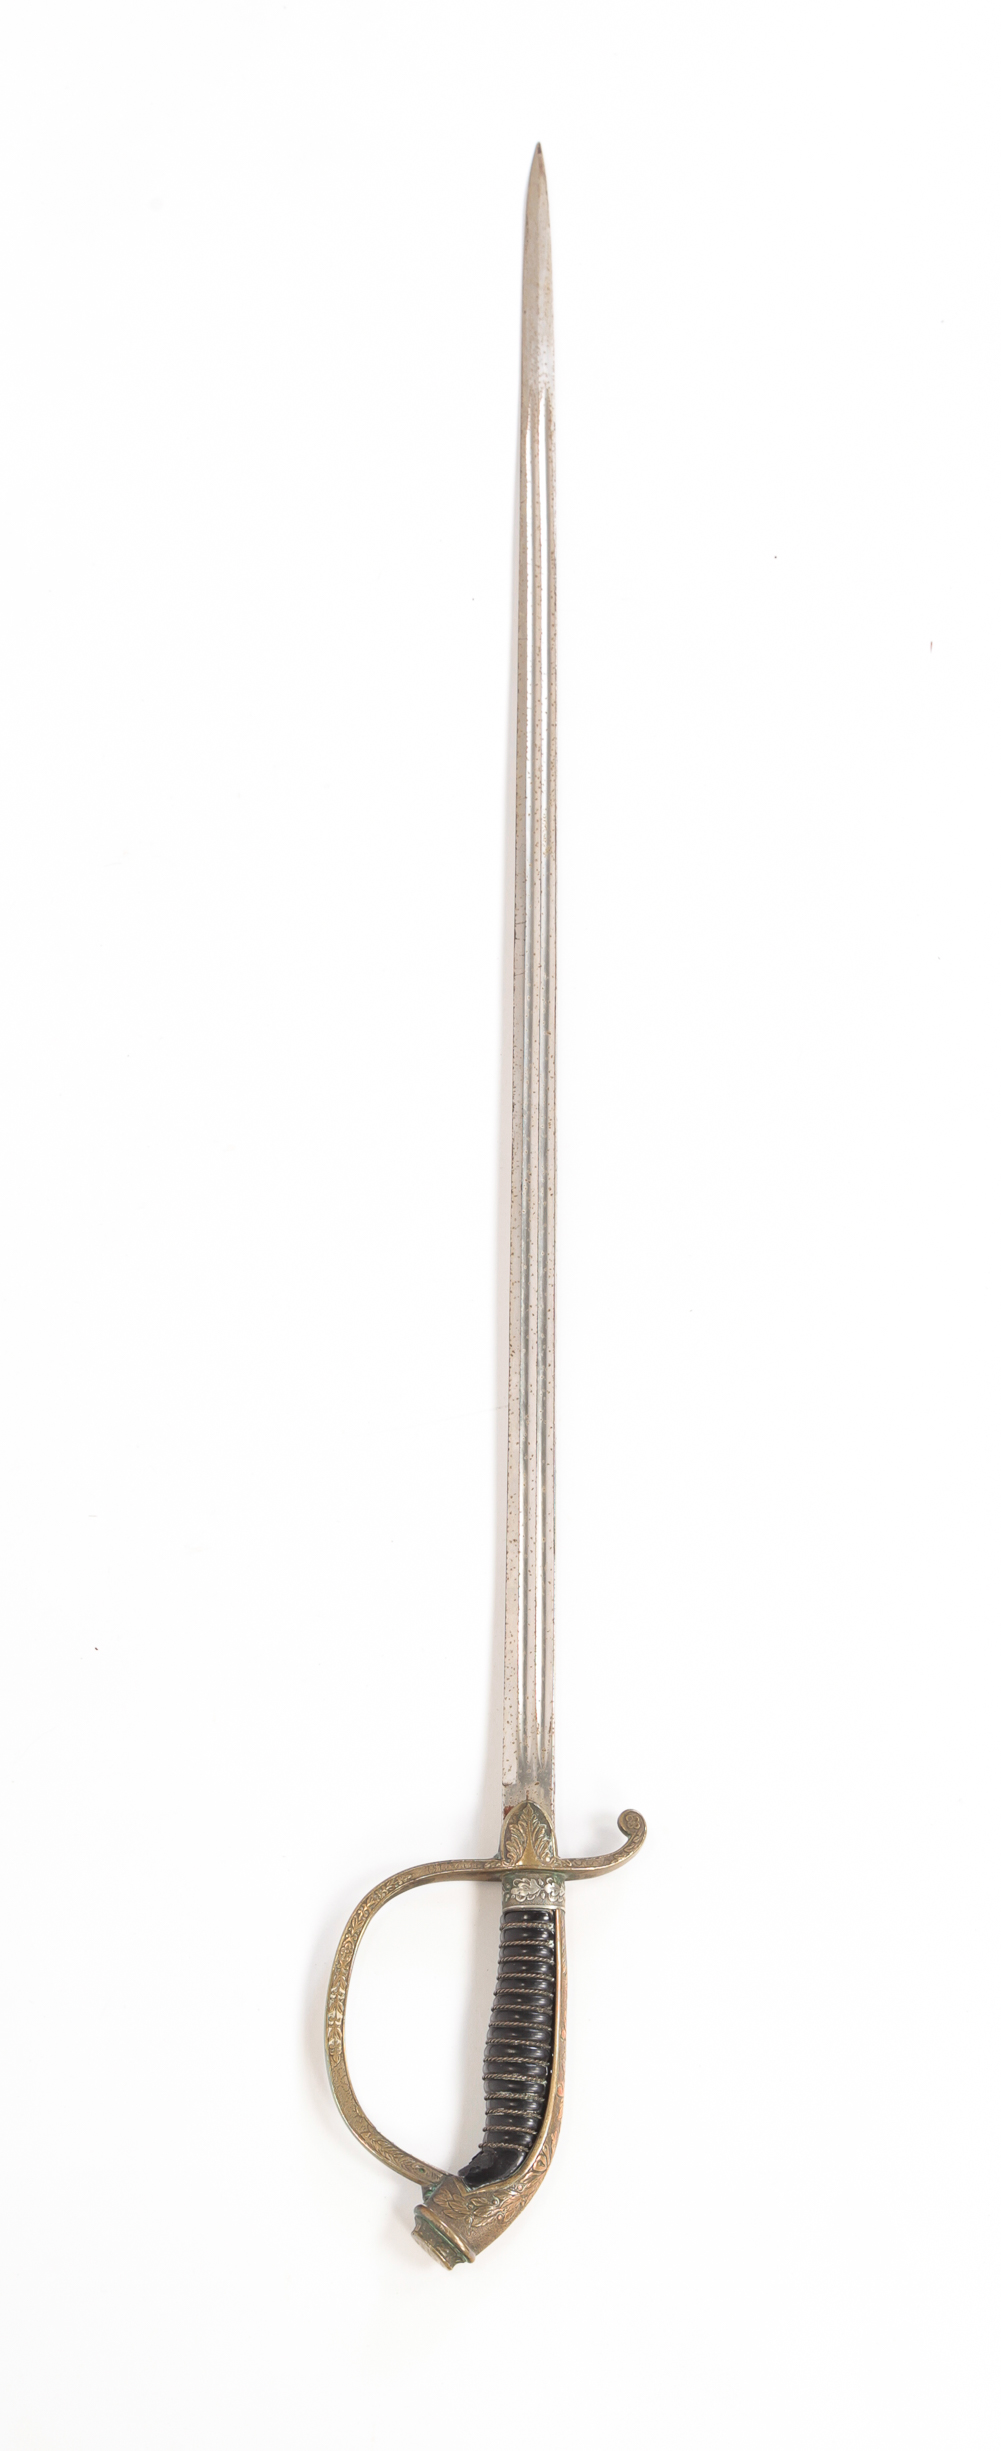 GERMAN PRESENTATION SWORD. Dated